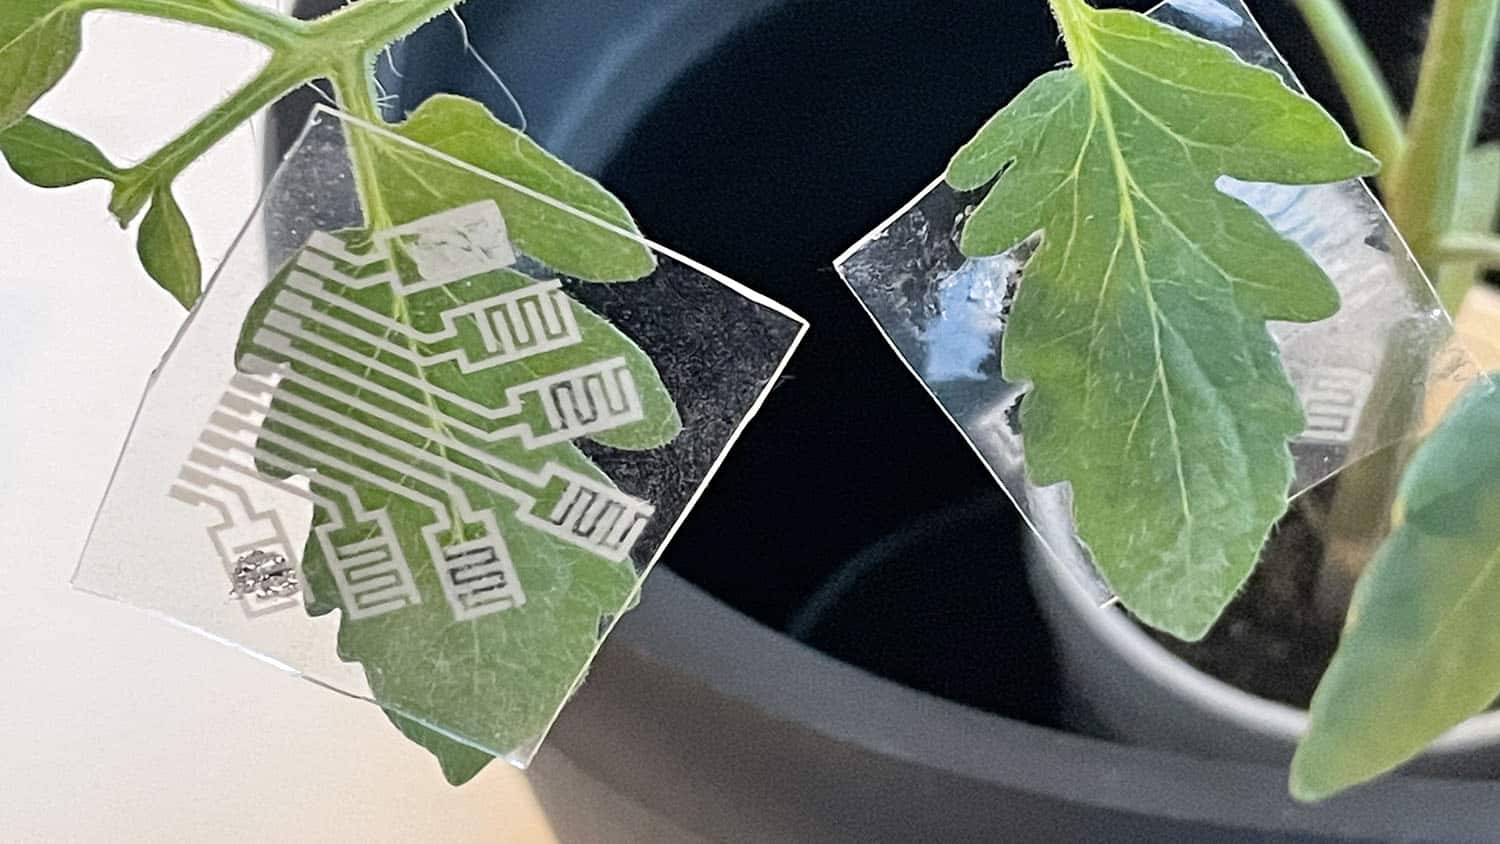 Sensor on a plant leaf